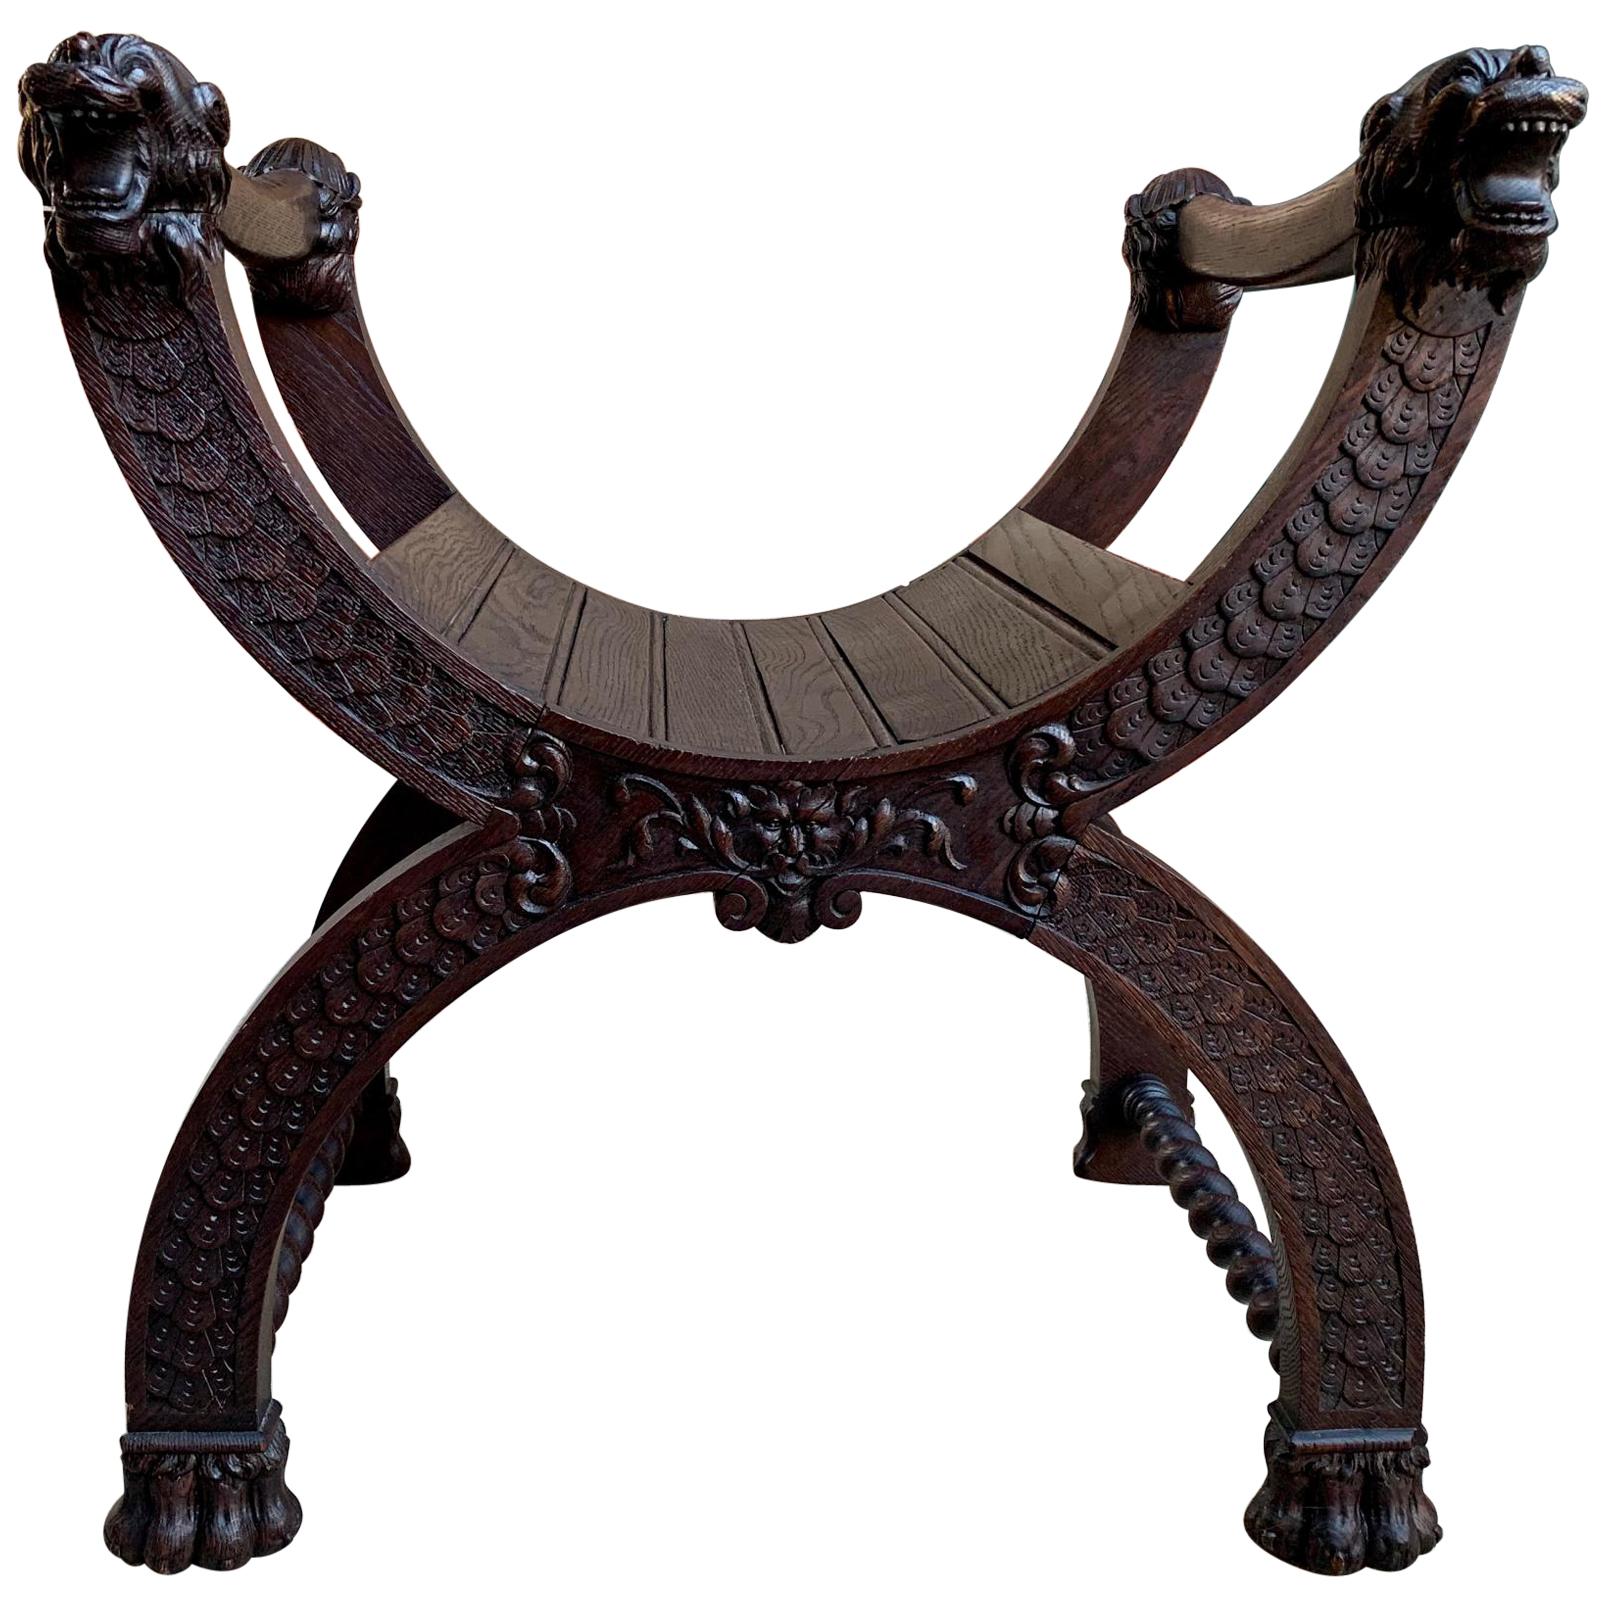 Antique French Carved Oak Curule Bench Chair Renaissance Dagobert Barley Twist